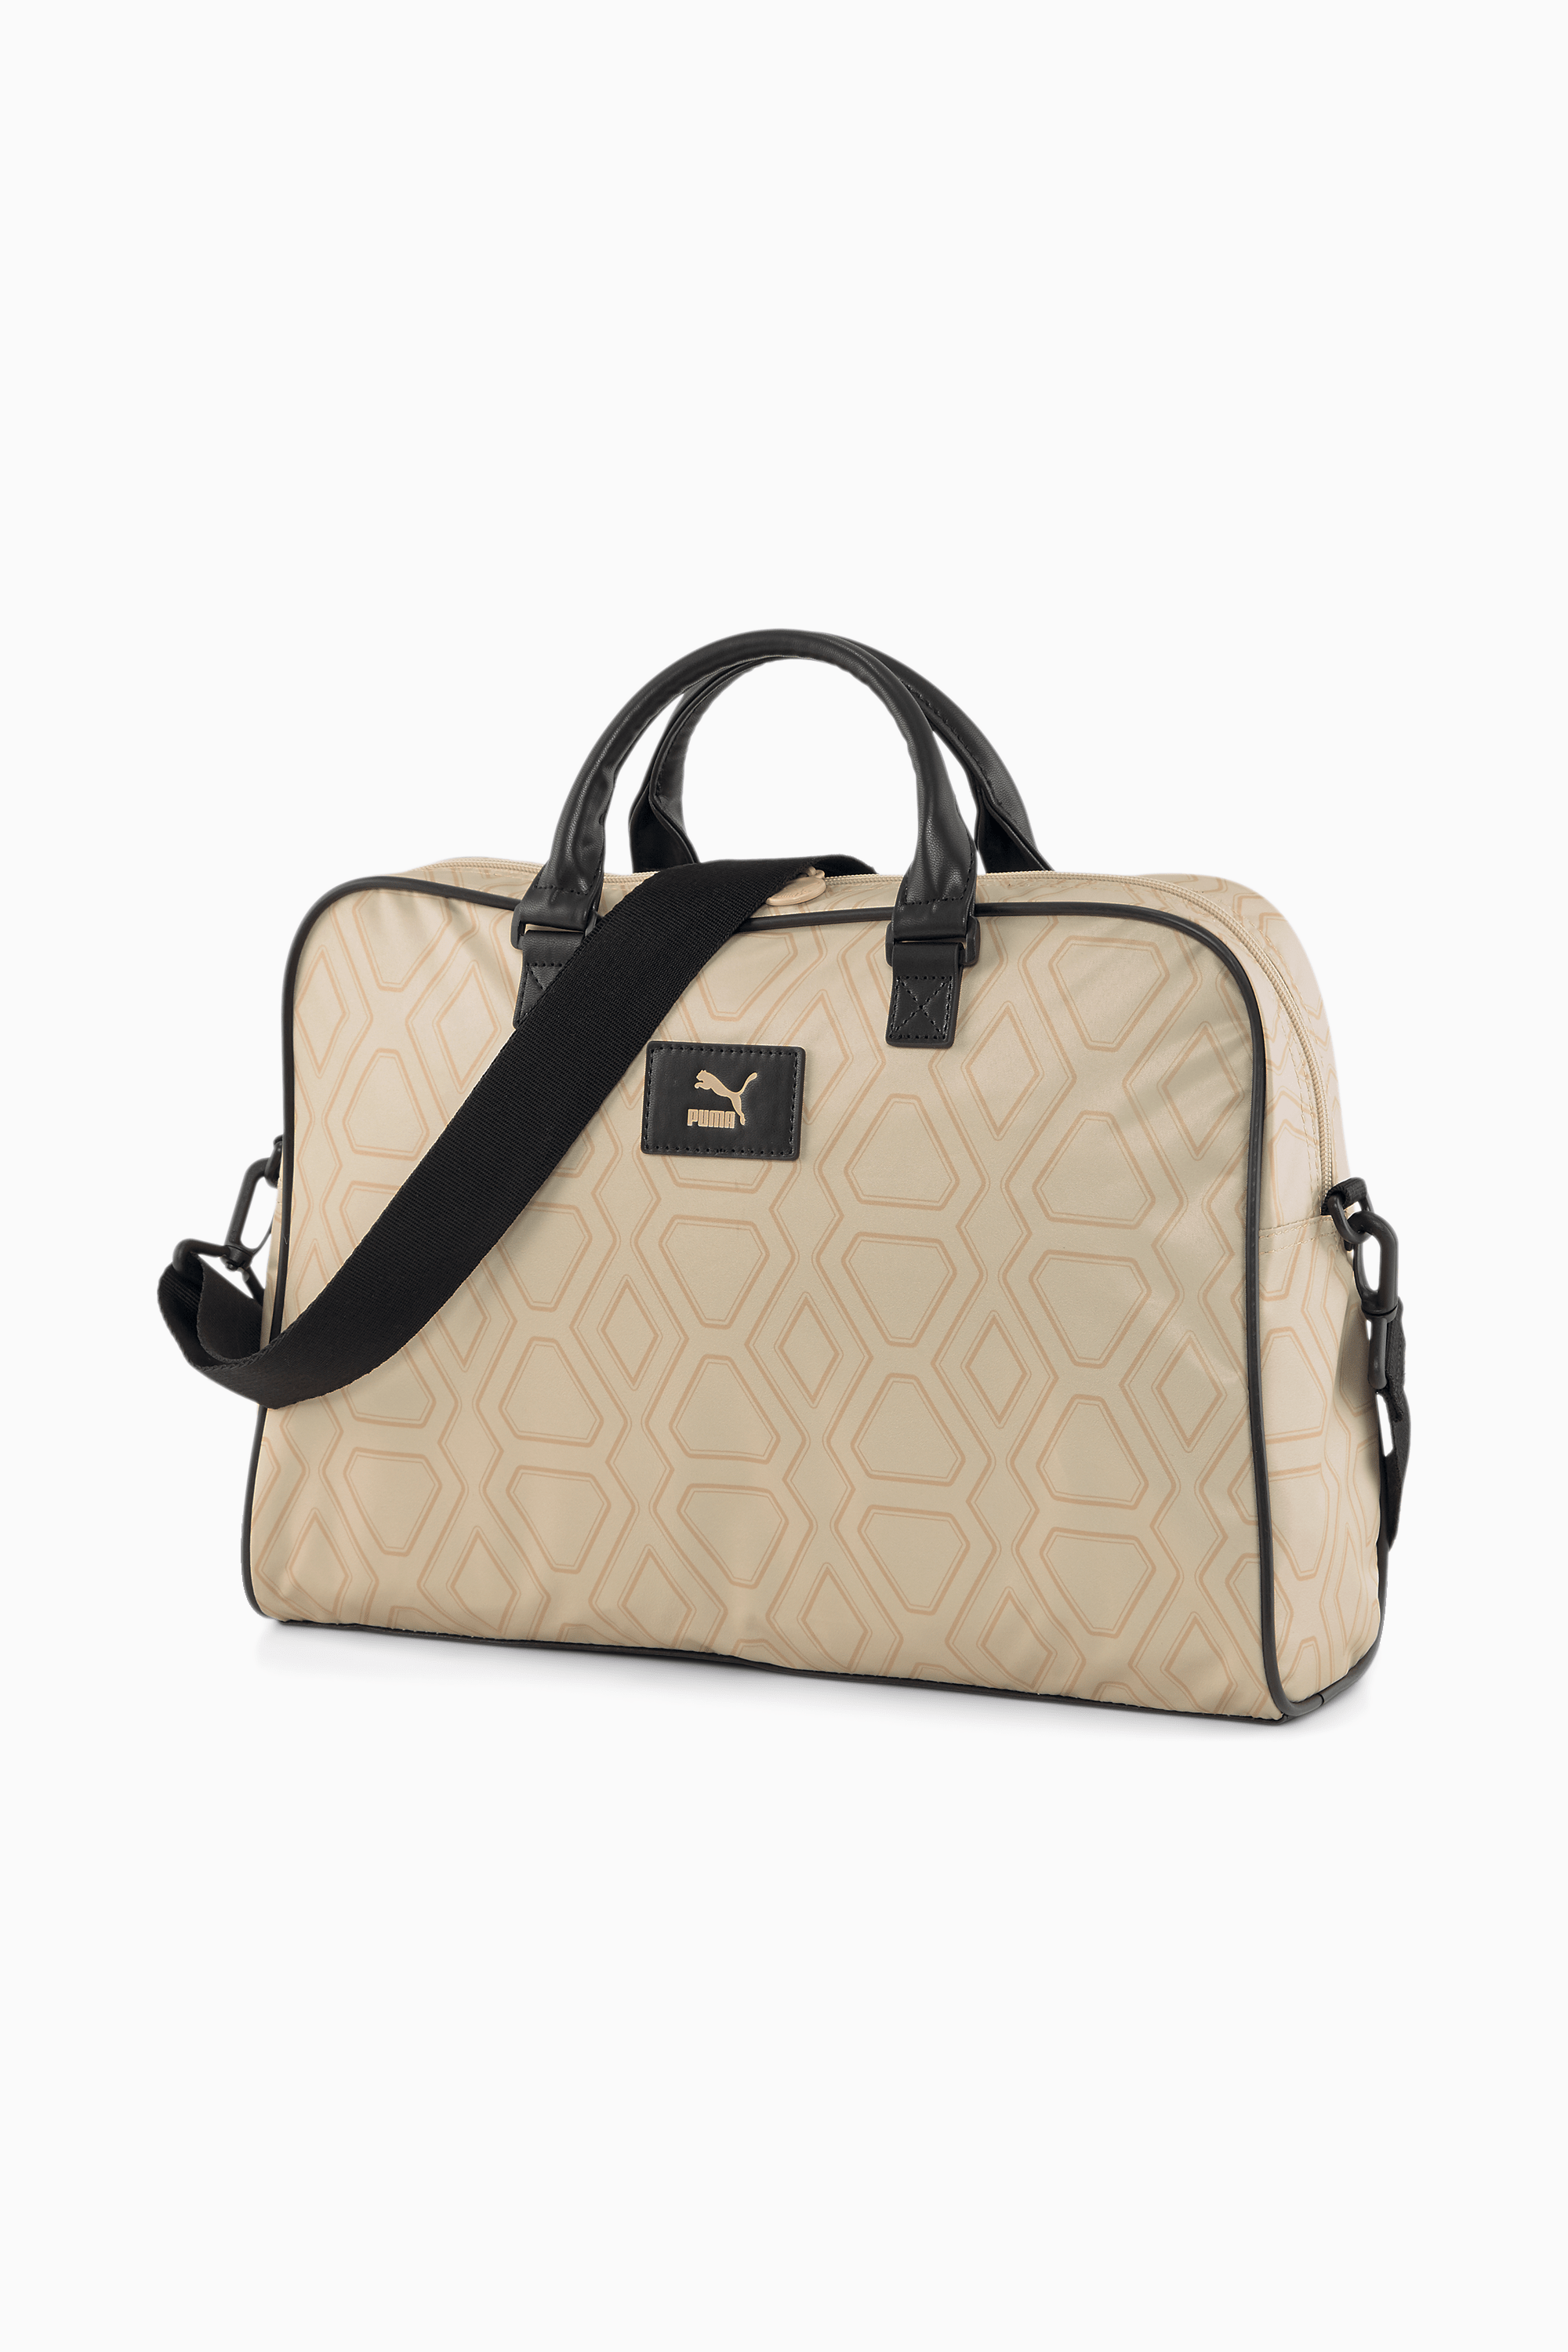 Louis Vuitton Backpack Handbag Zipper, Women bag, brown, luggage Bags, women  Accessories png